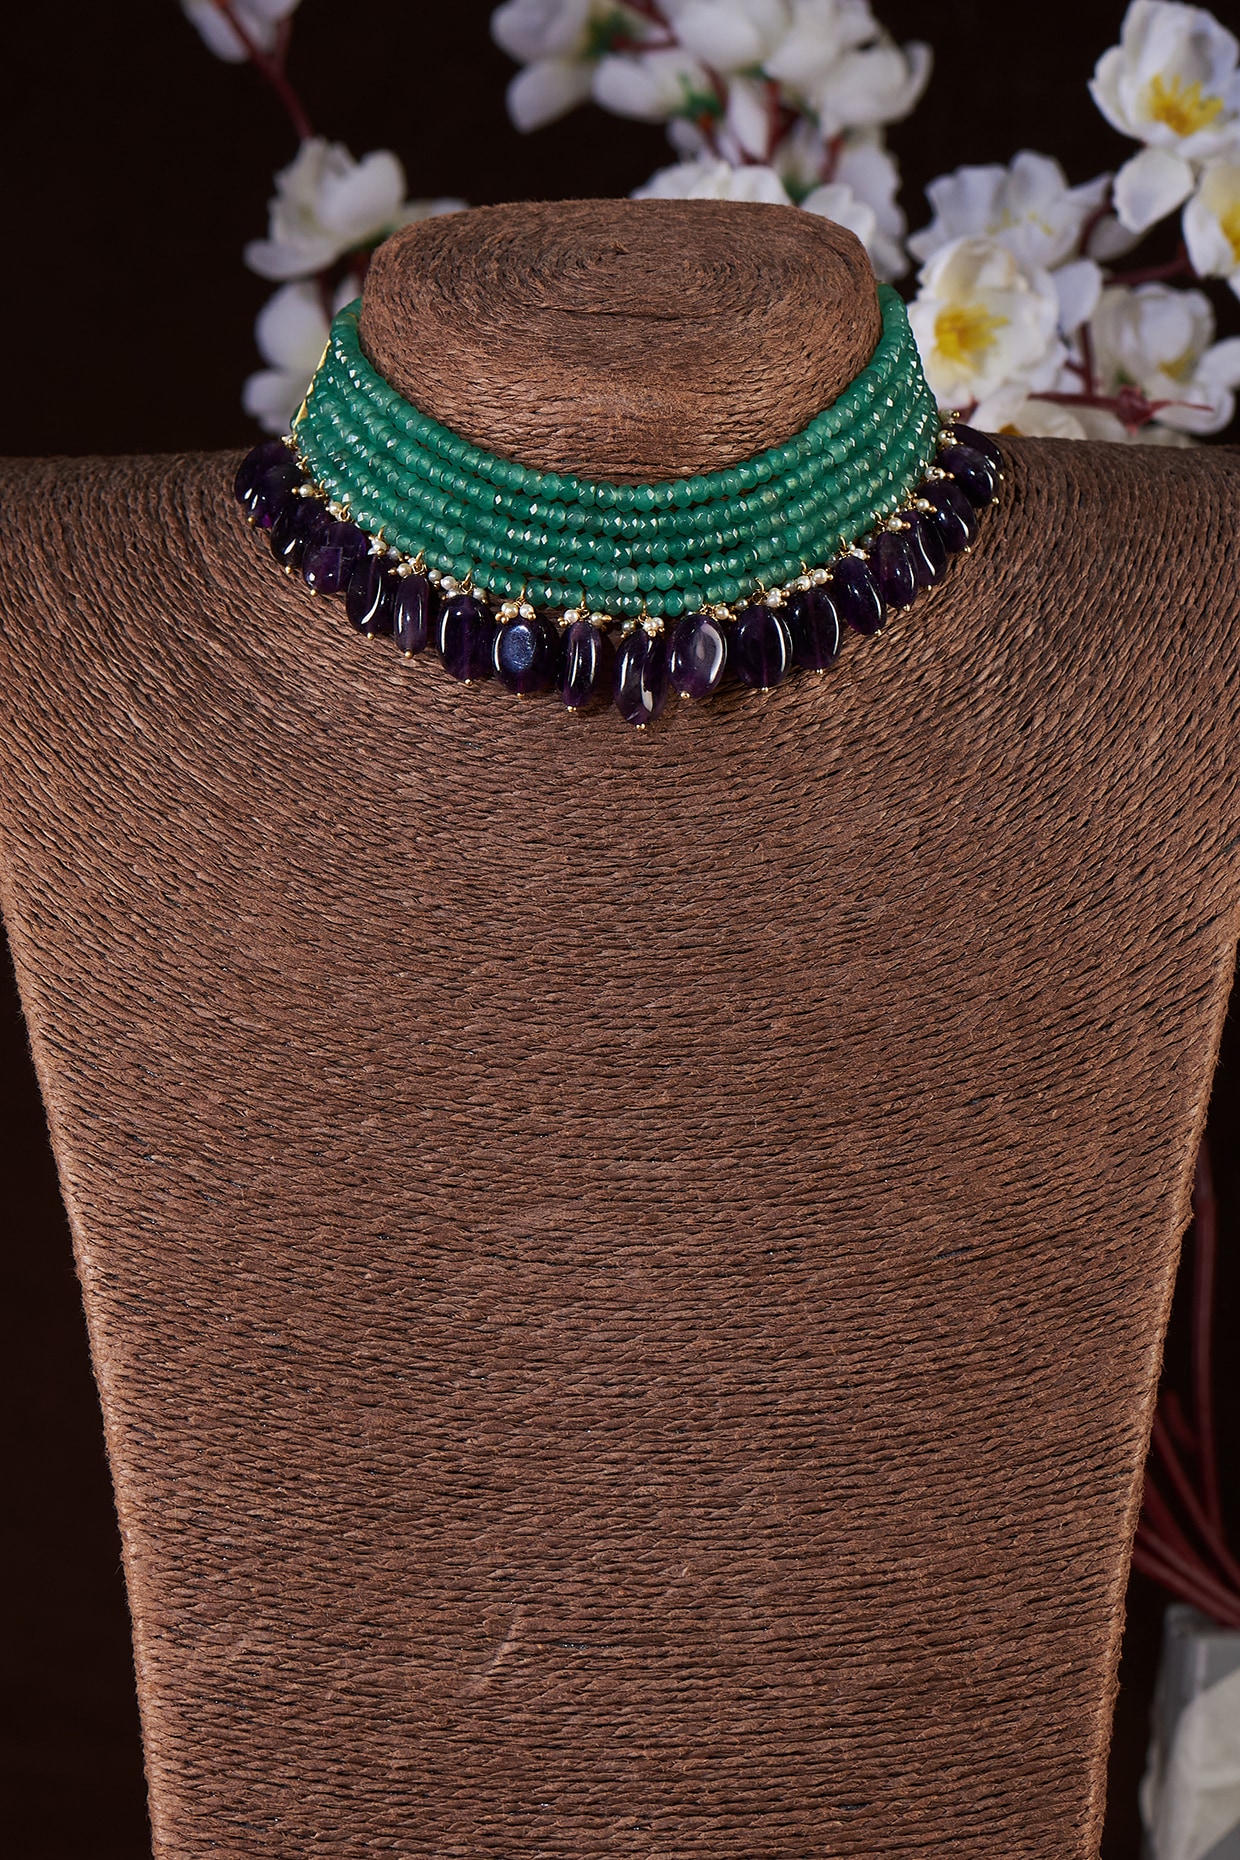 Oxidized Silver Purple Necklace Set